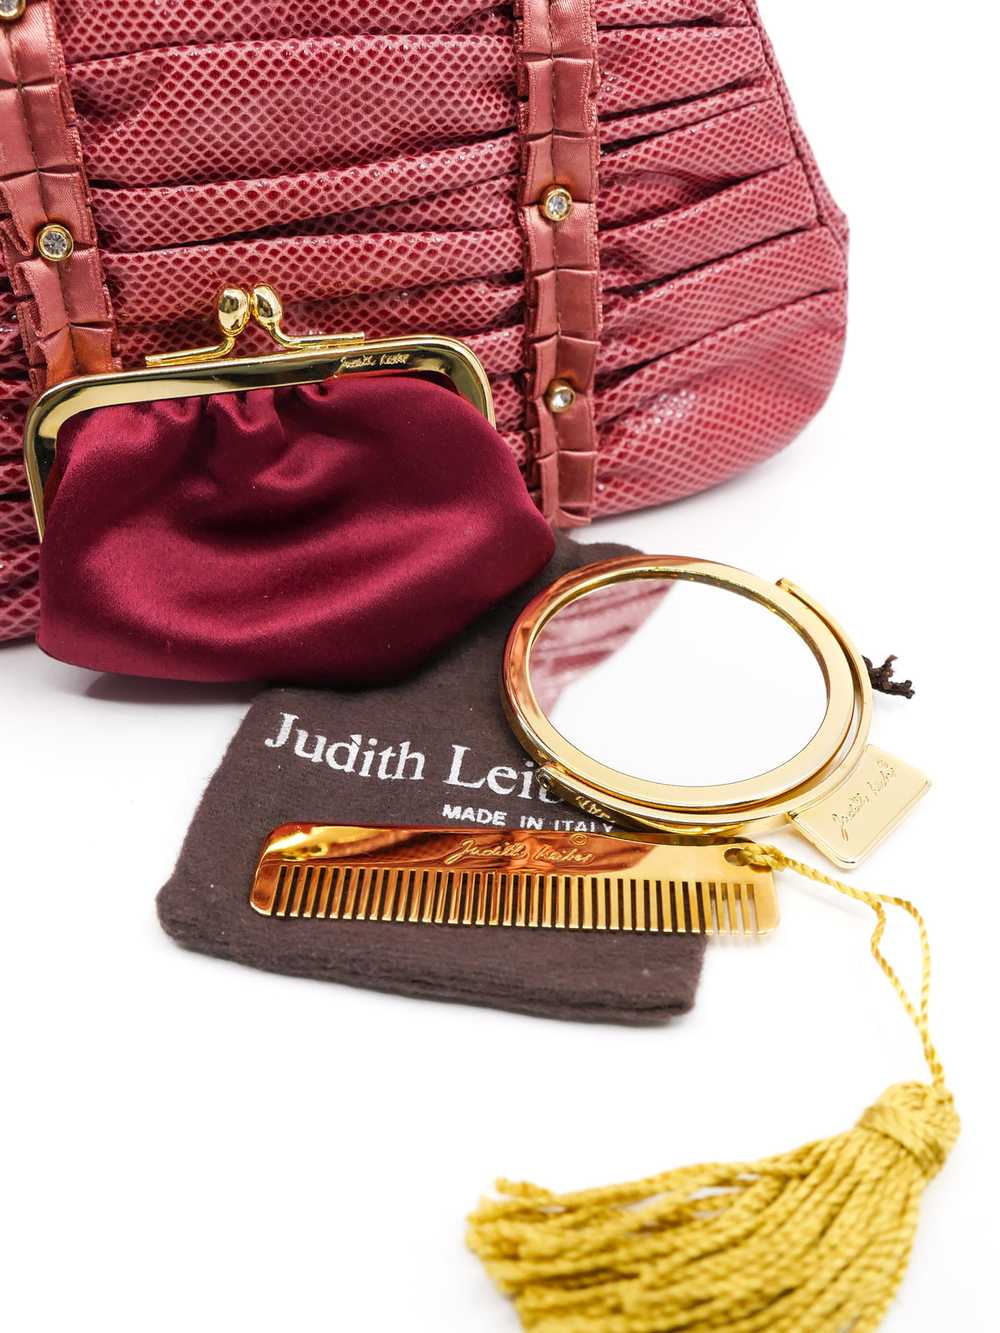 Judith Leiber Rose Lizard Top Handle Bag - image 8